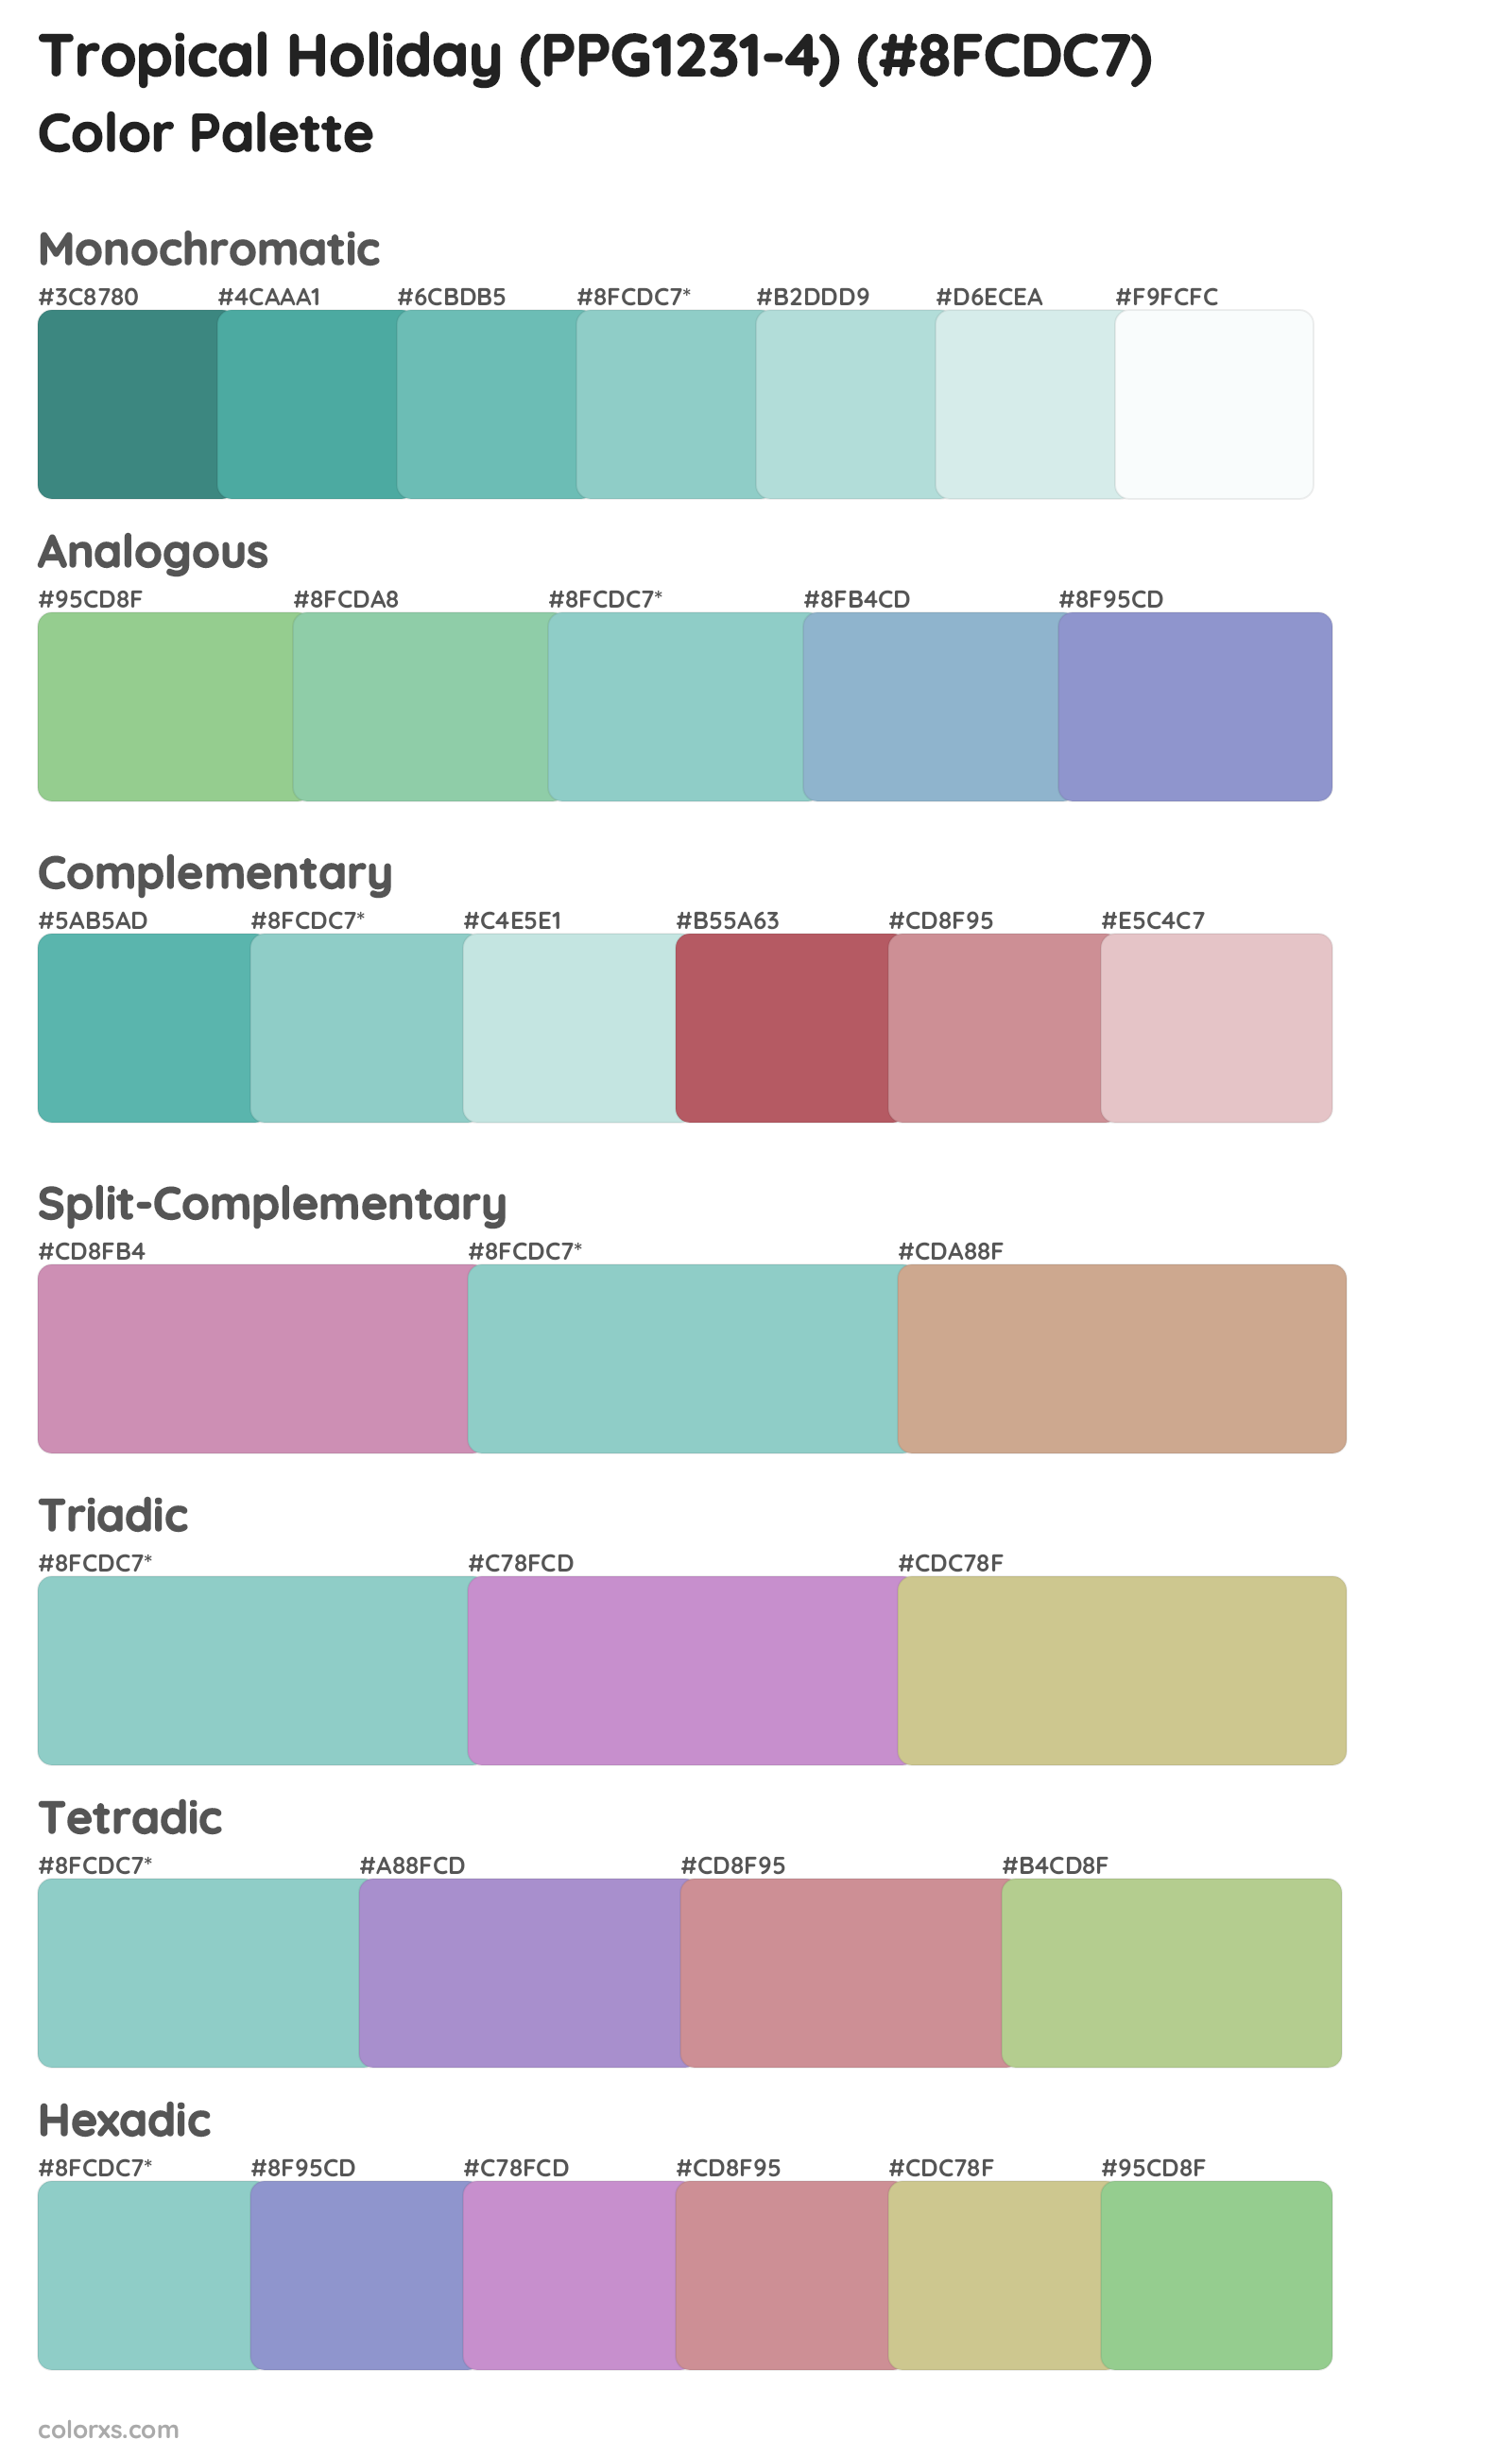 Tropical Holiday (PPG1231-4) Color Scheme Palettes